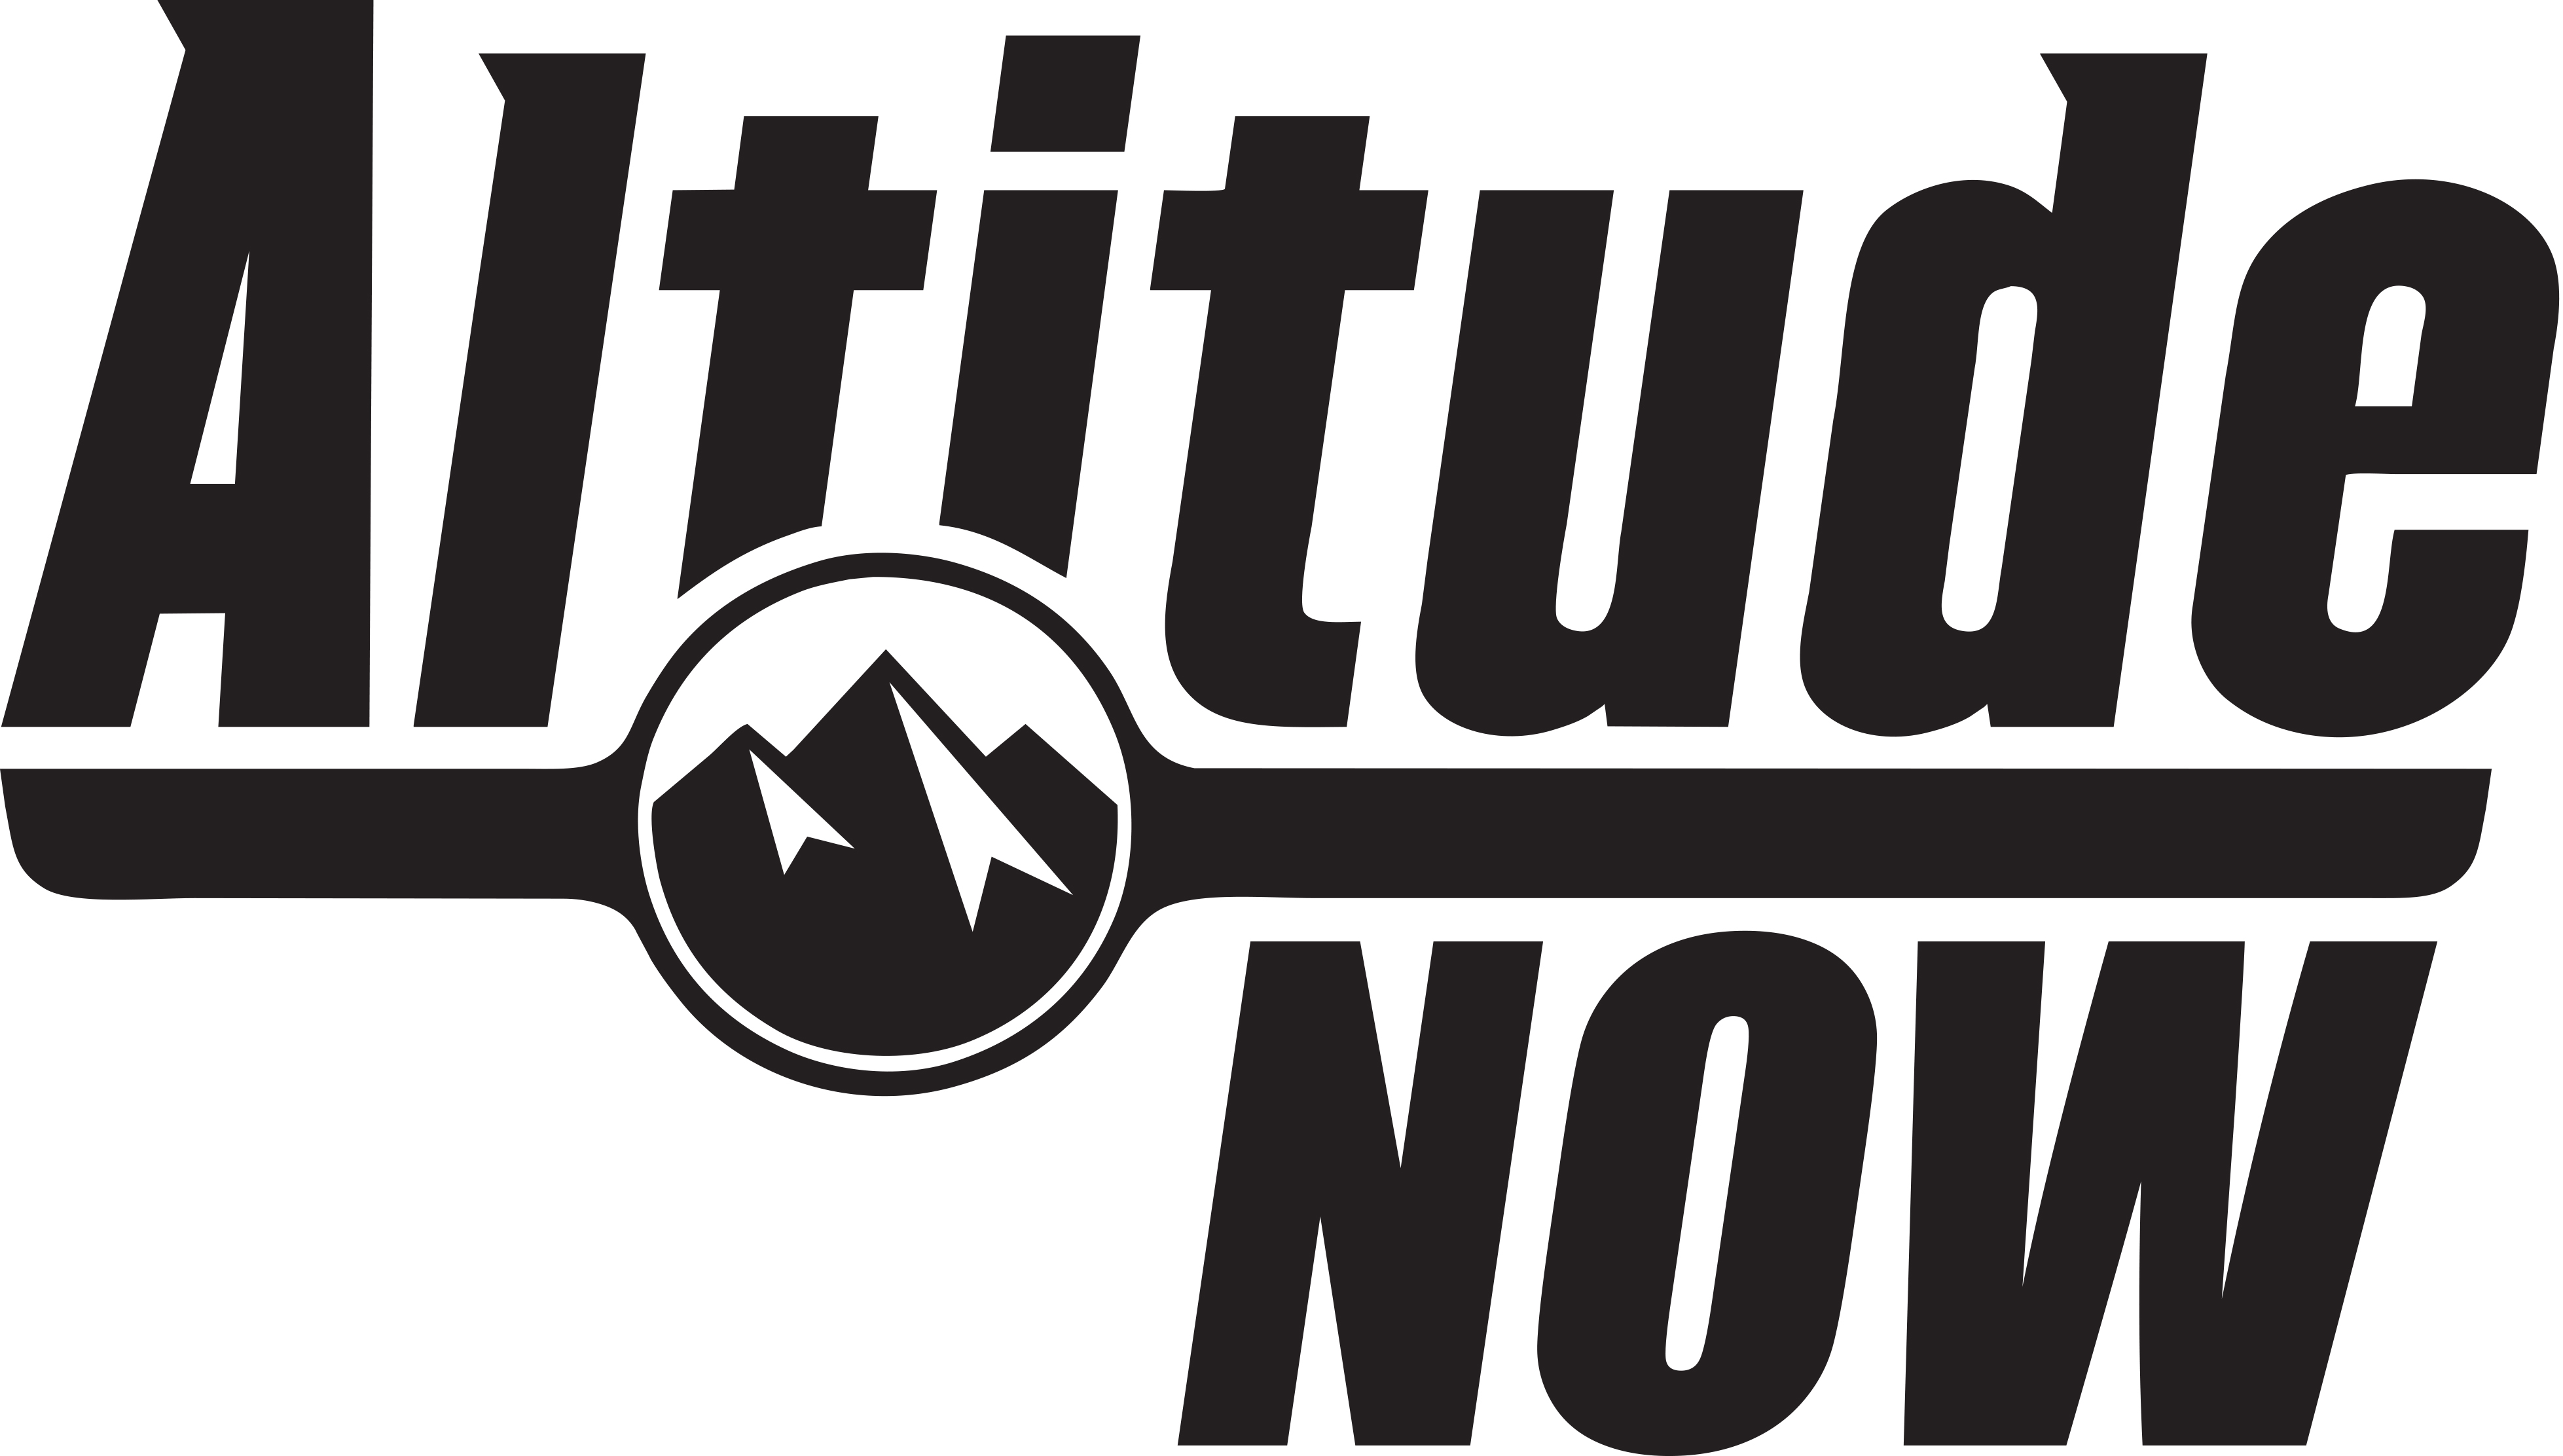 Altitude Sports] Altitude member ship for $1 (regular $24.99